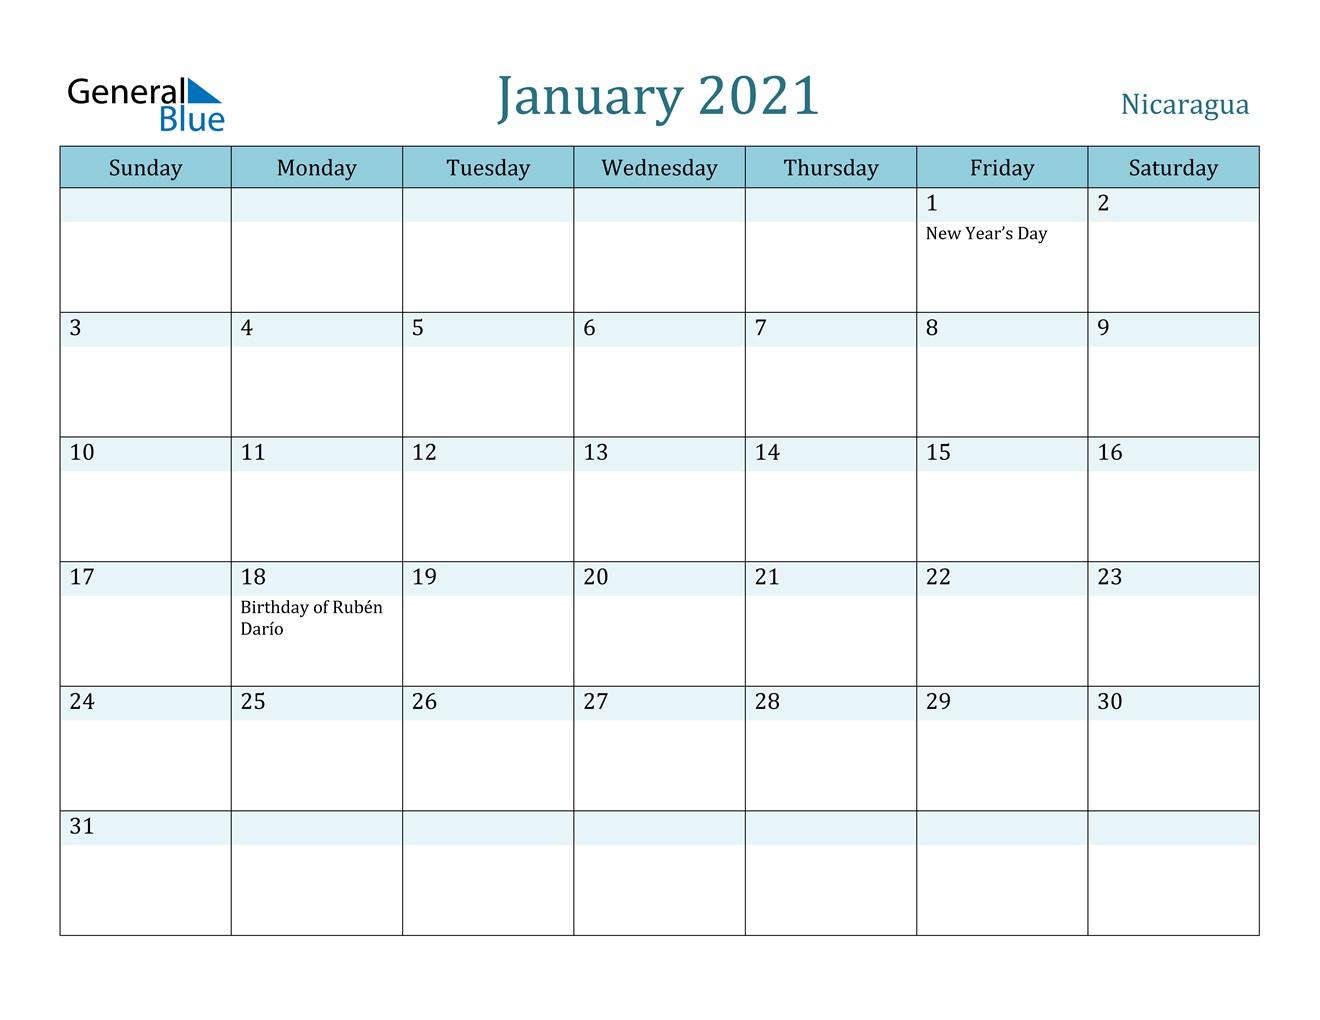 January 2021 Calendar - Nicaragua